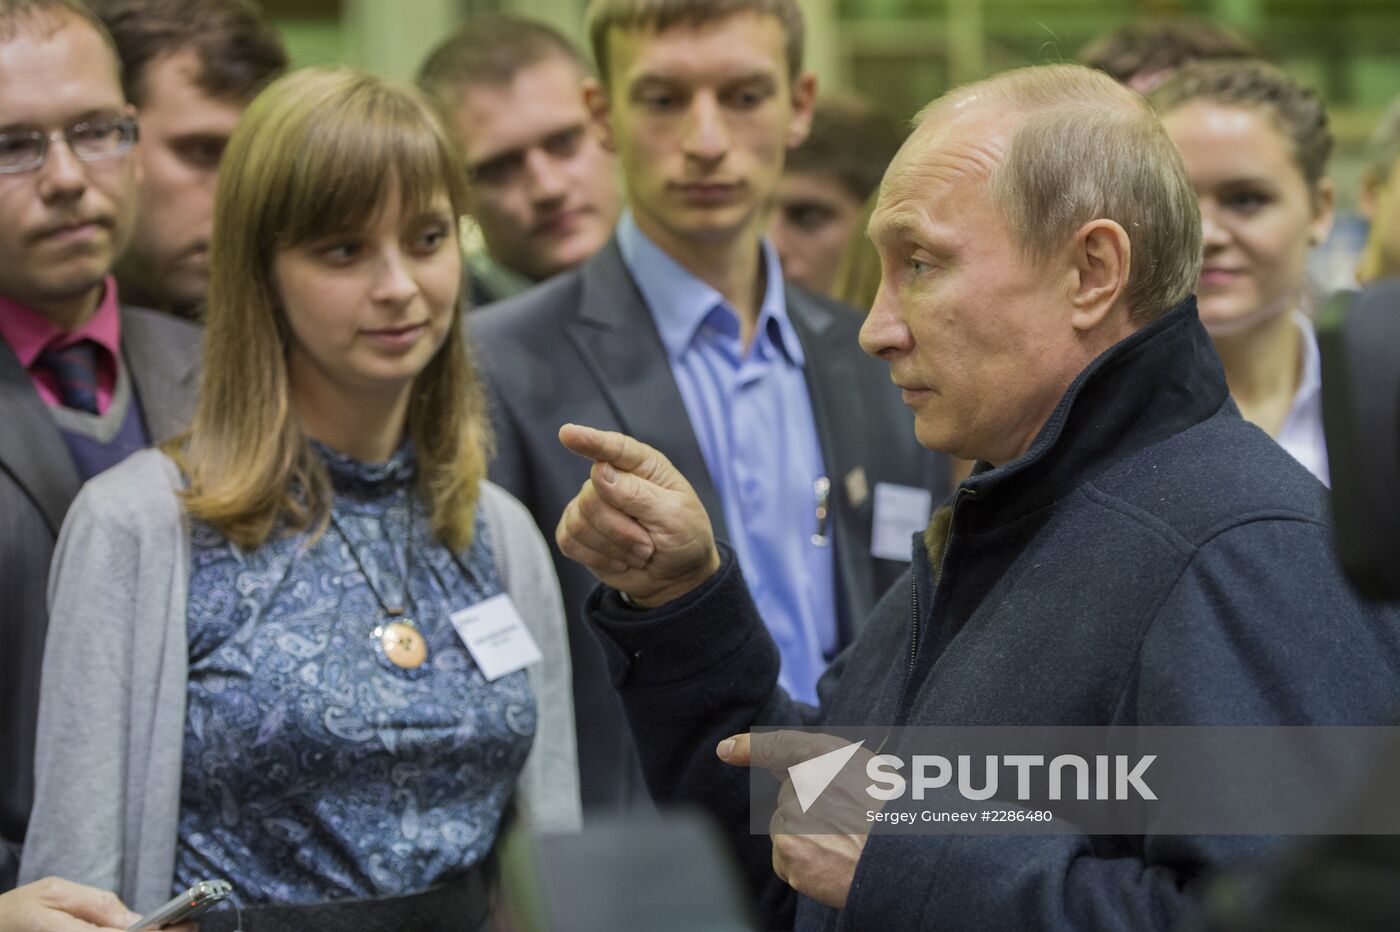 Vladimir Putin's working visit to Izhevsk